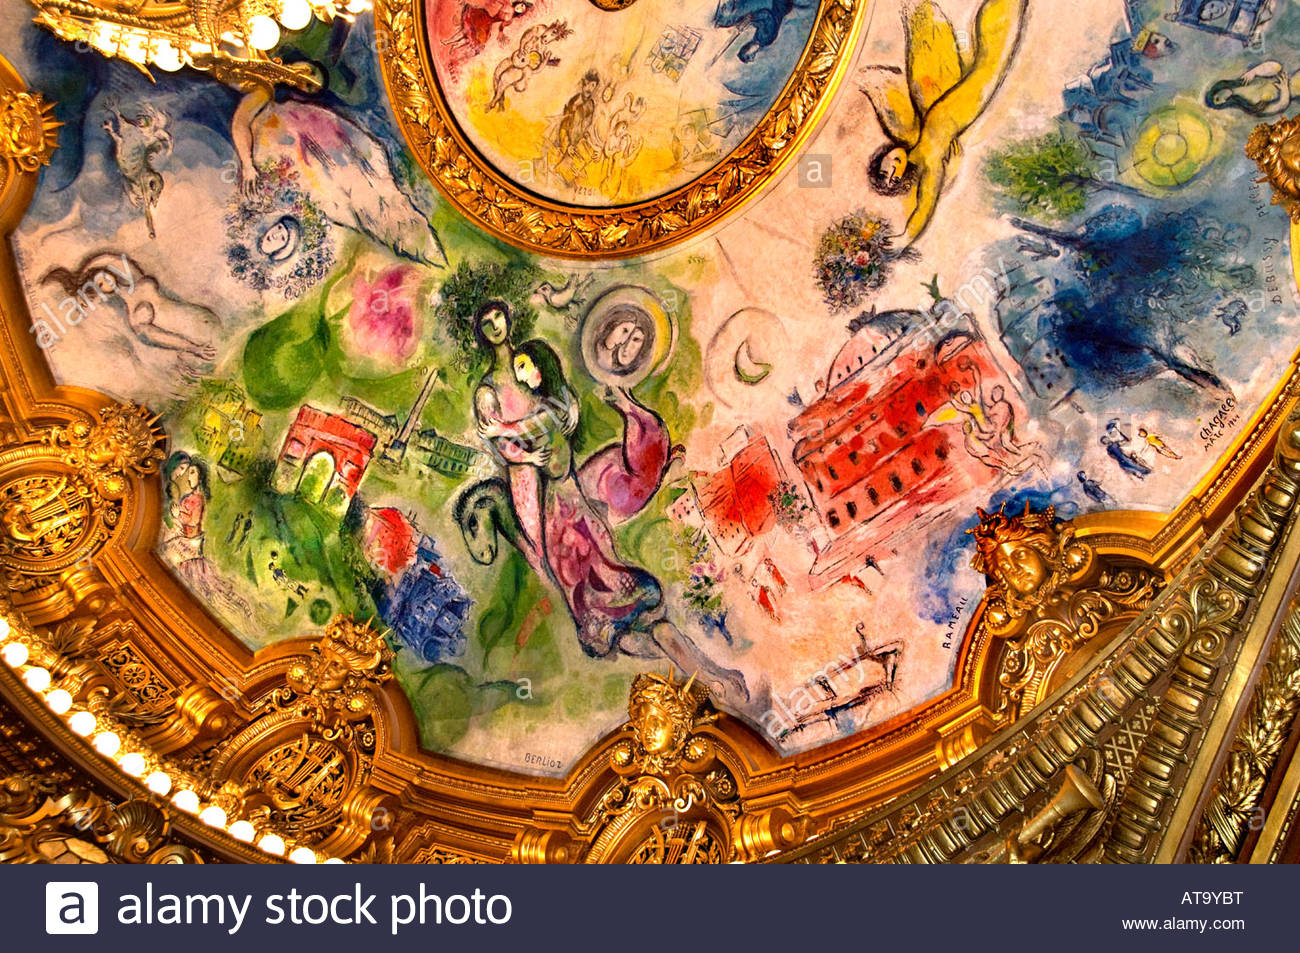 Garnier Opera Paris Chagall Stock Photos & Garnier Opera Paris Chagall Stock Images - Alamy